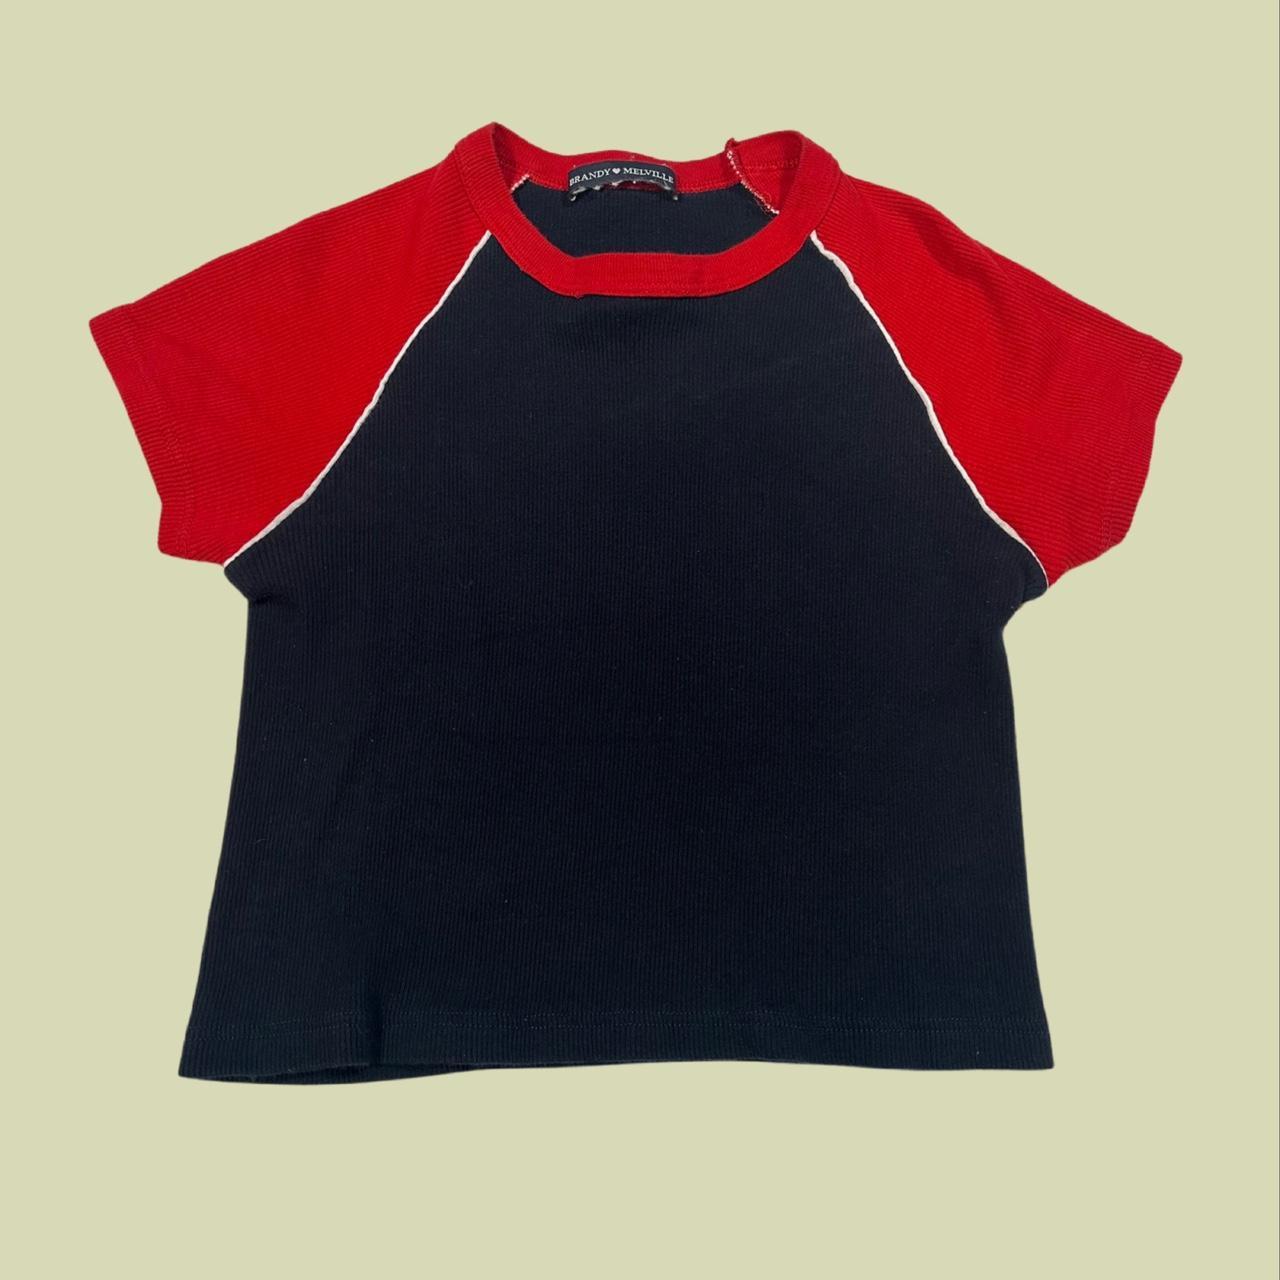 Brandy Melville red and black crop top ❤️ In great - Depop